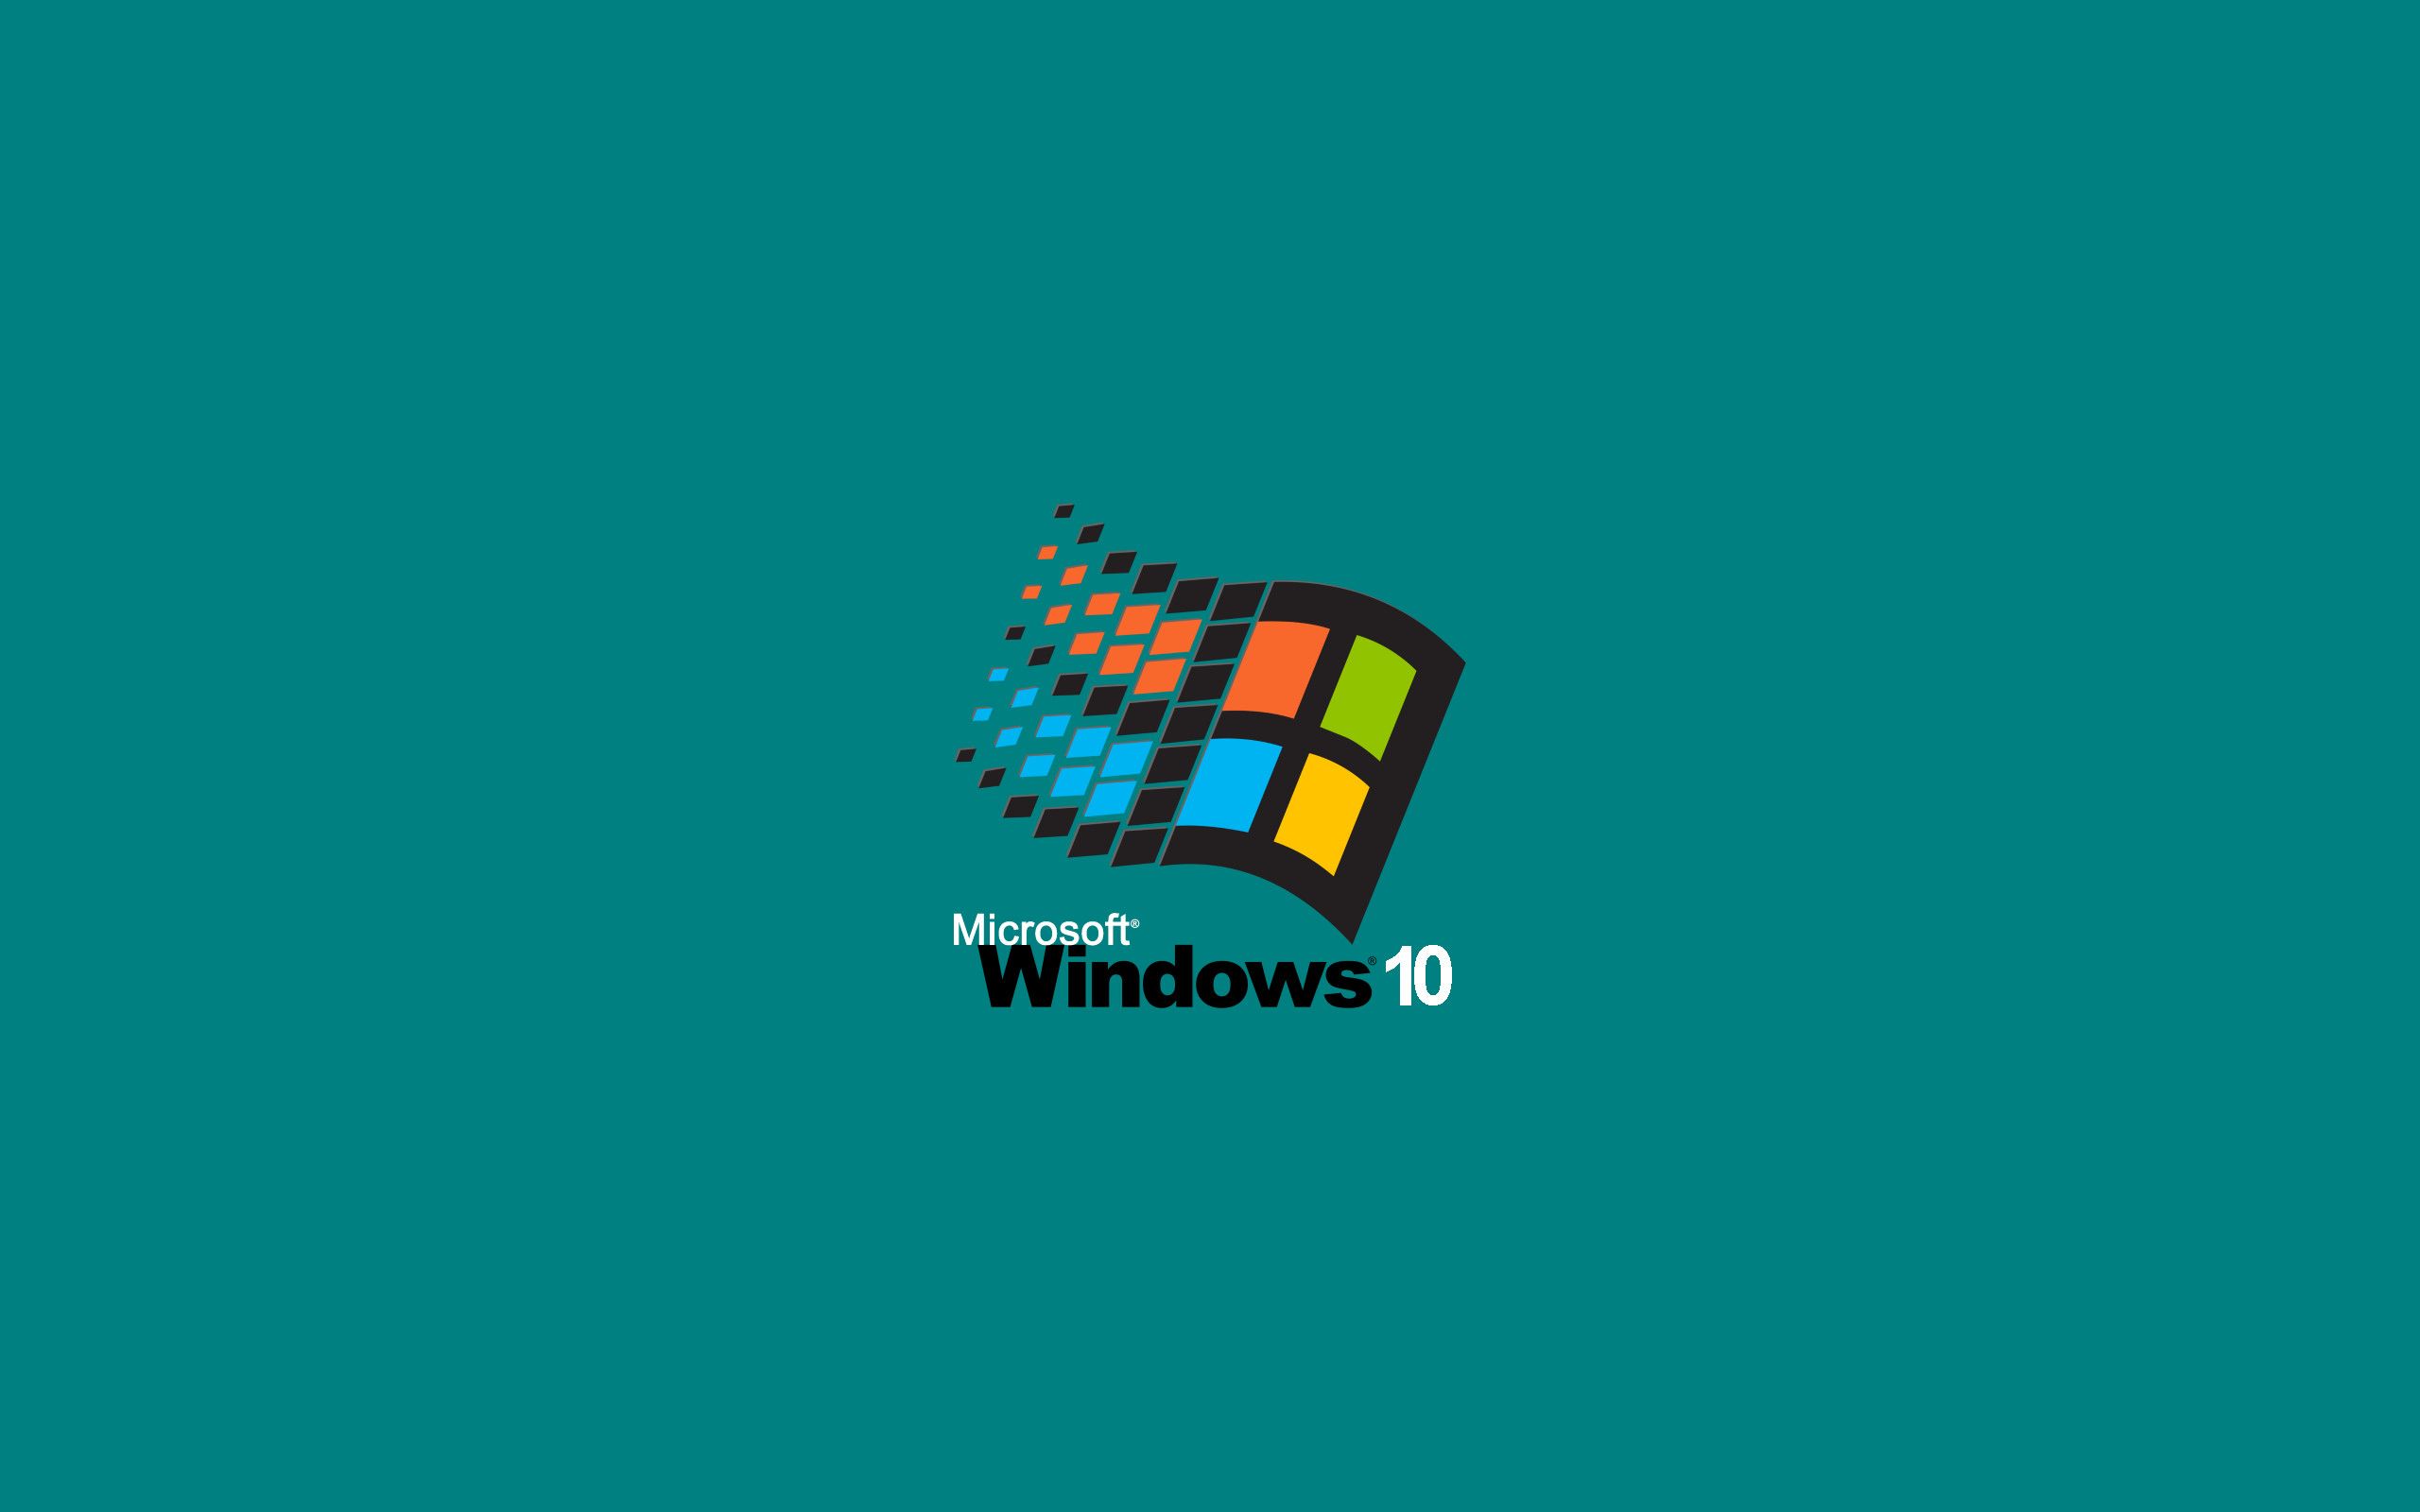 Windows 10 wallpaper with the logo - Windows 98